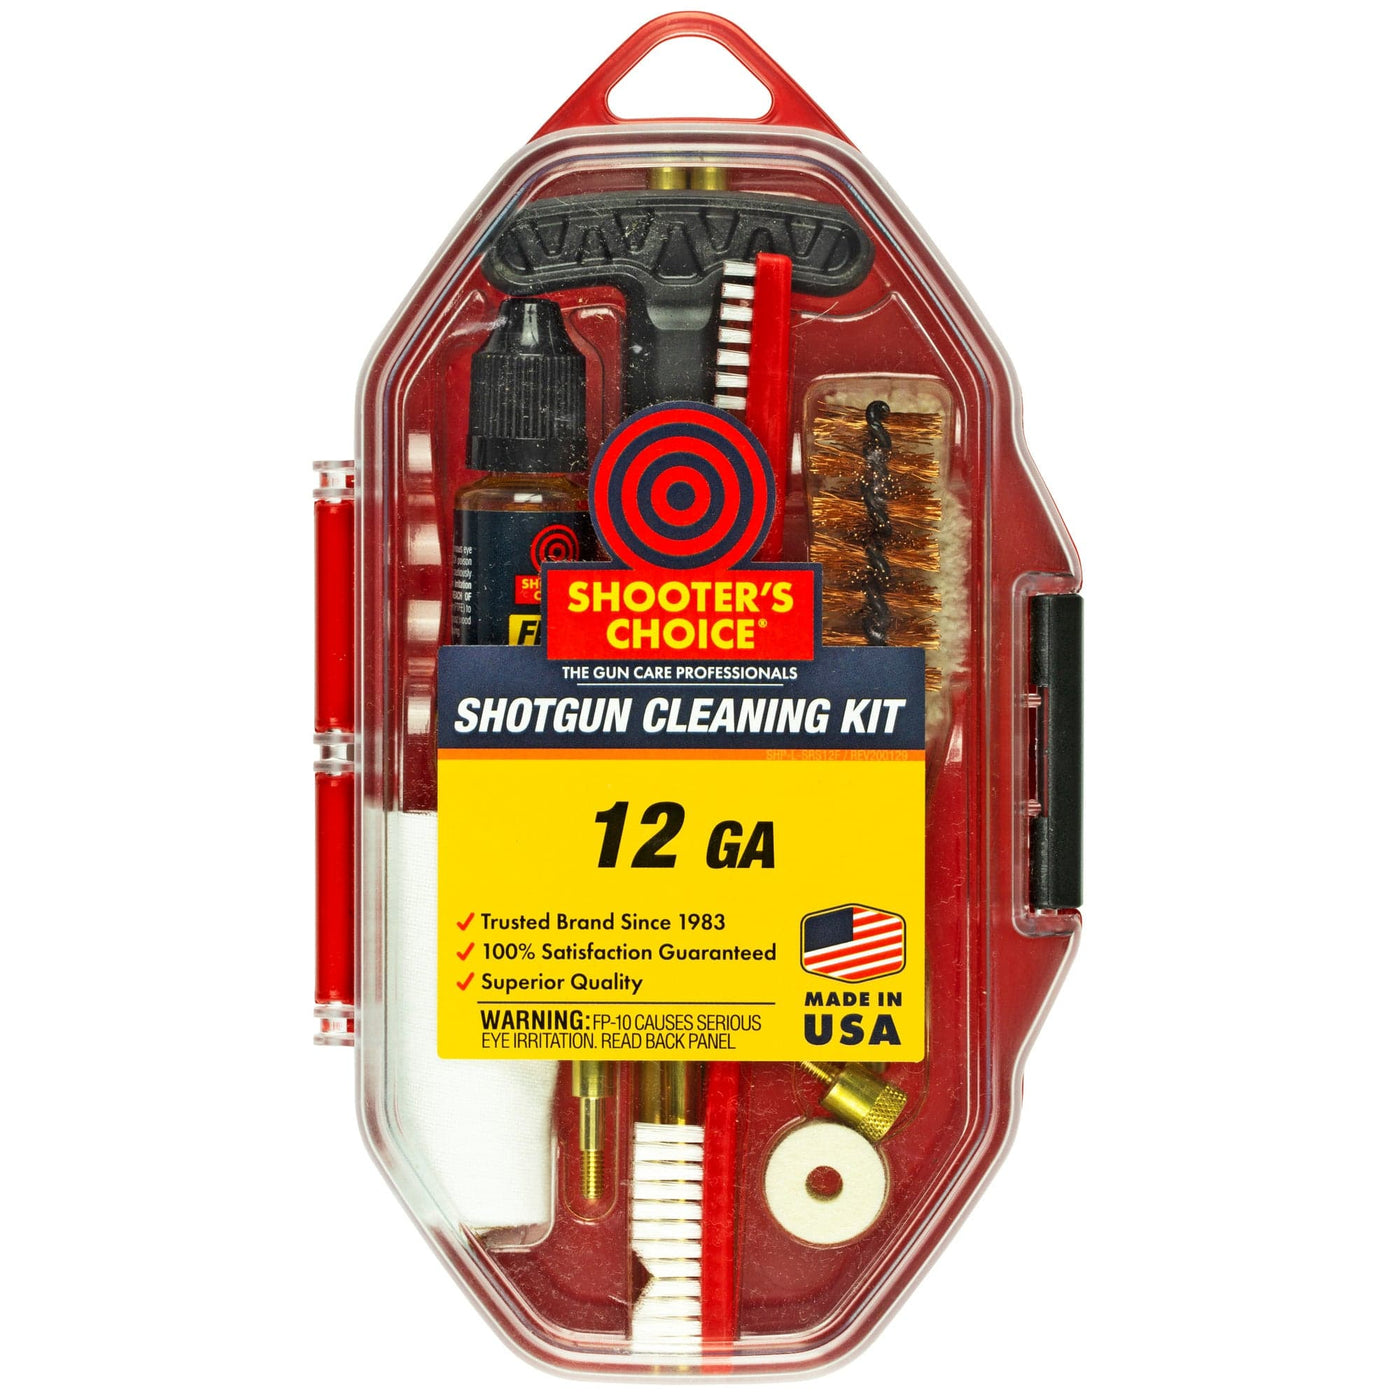 Shooters Choice Shooters Choice 12 Ga Shotgun - Cleaning Kit Gun Care